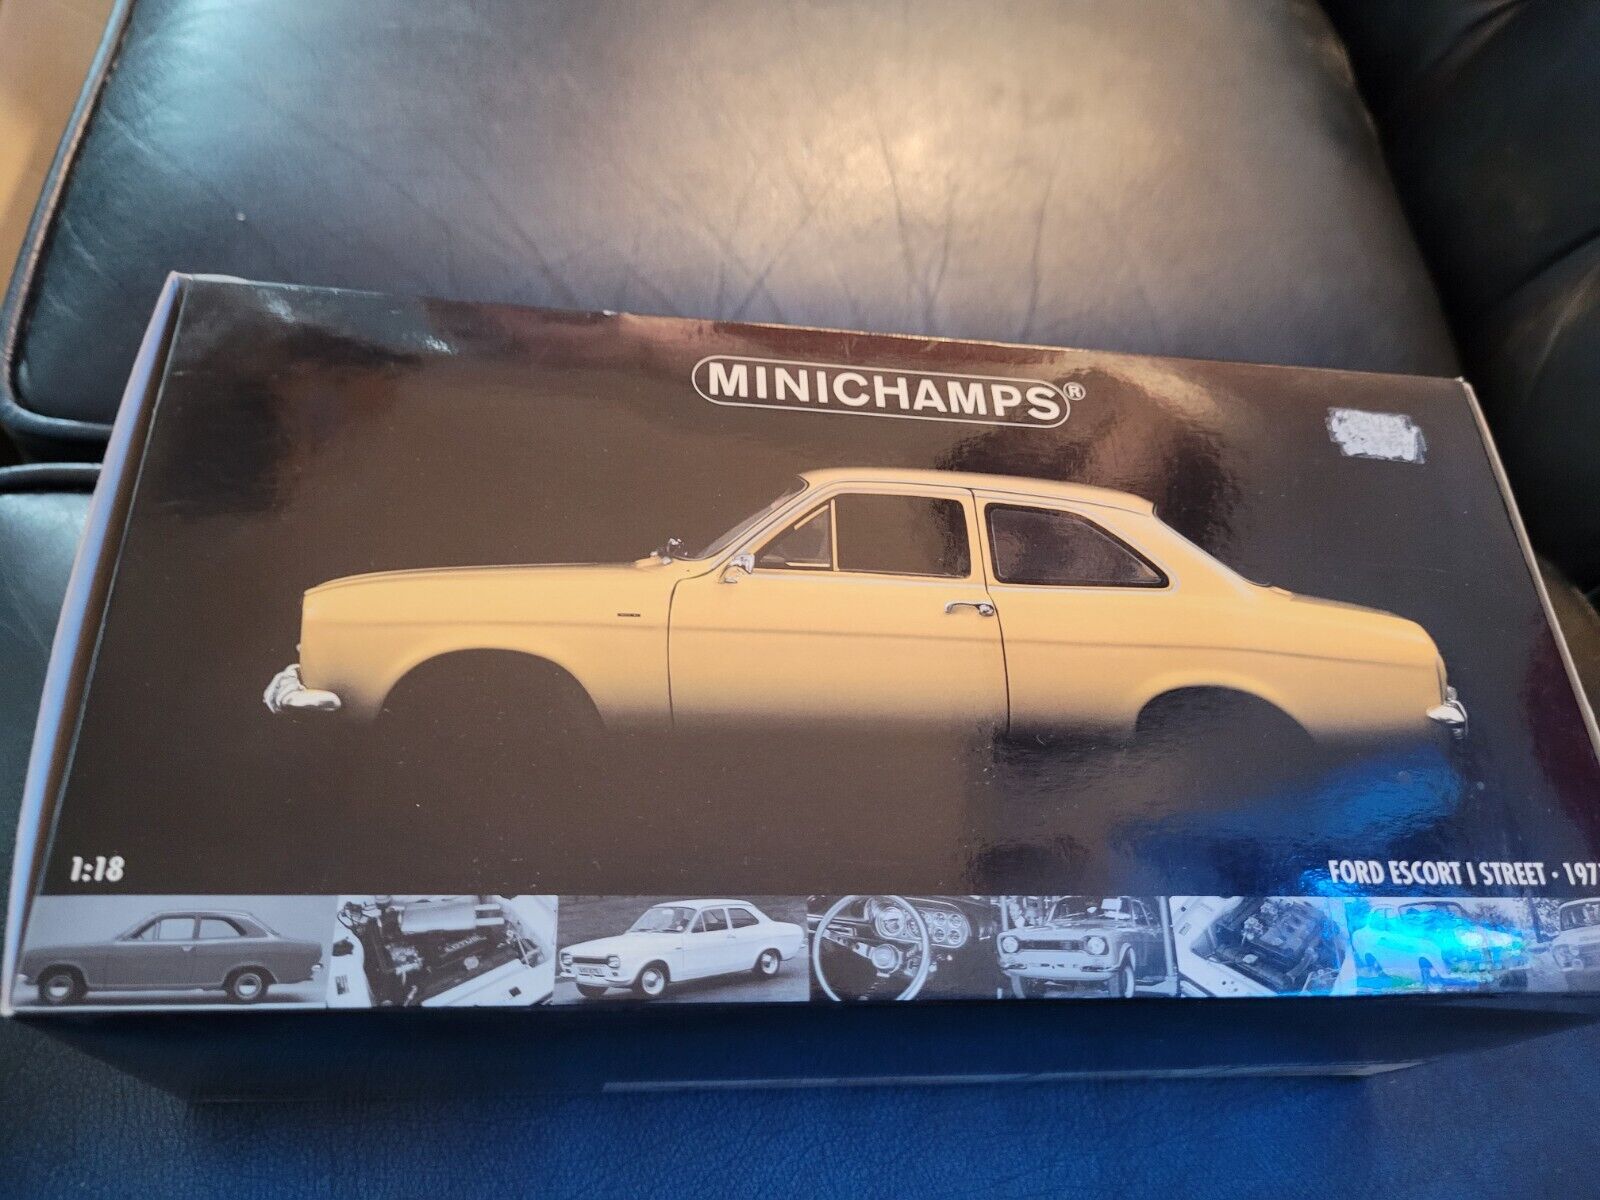 Minichamps 1 18 Ford Escort I Street 1971 New In Box Rare Superb